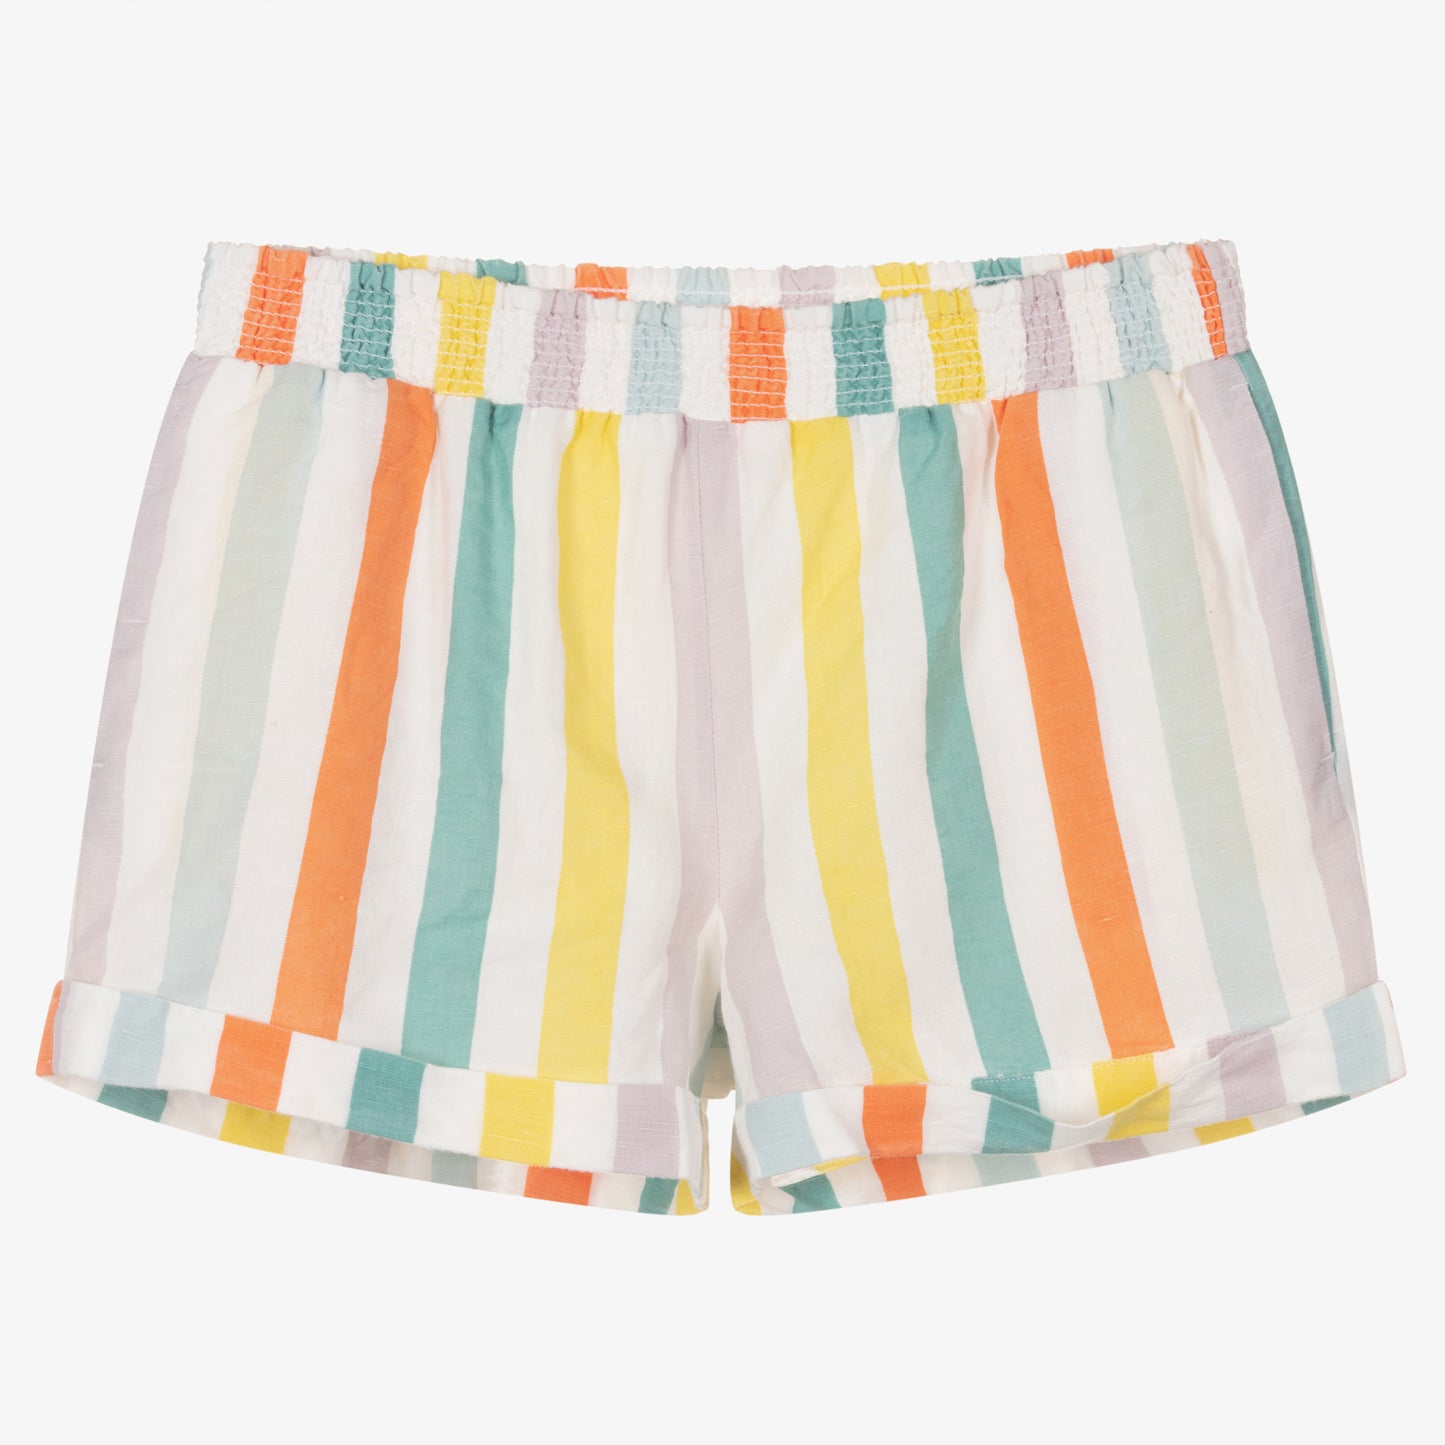 Striped SMC Shorts